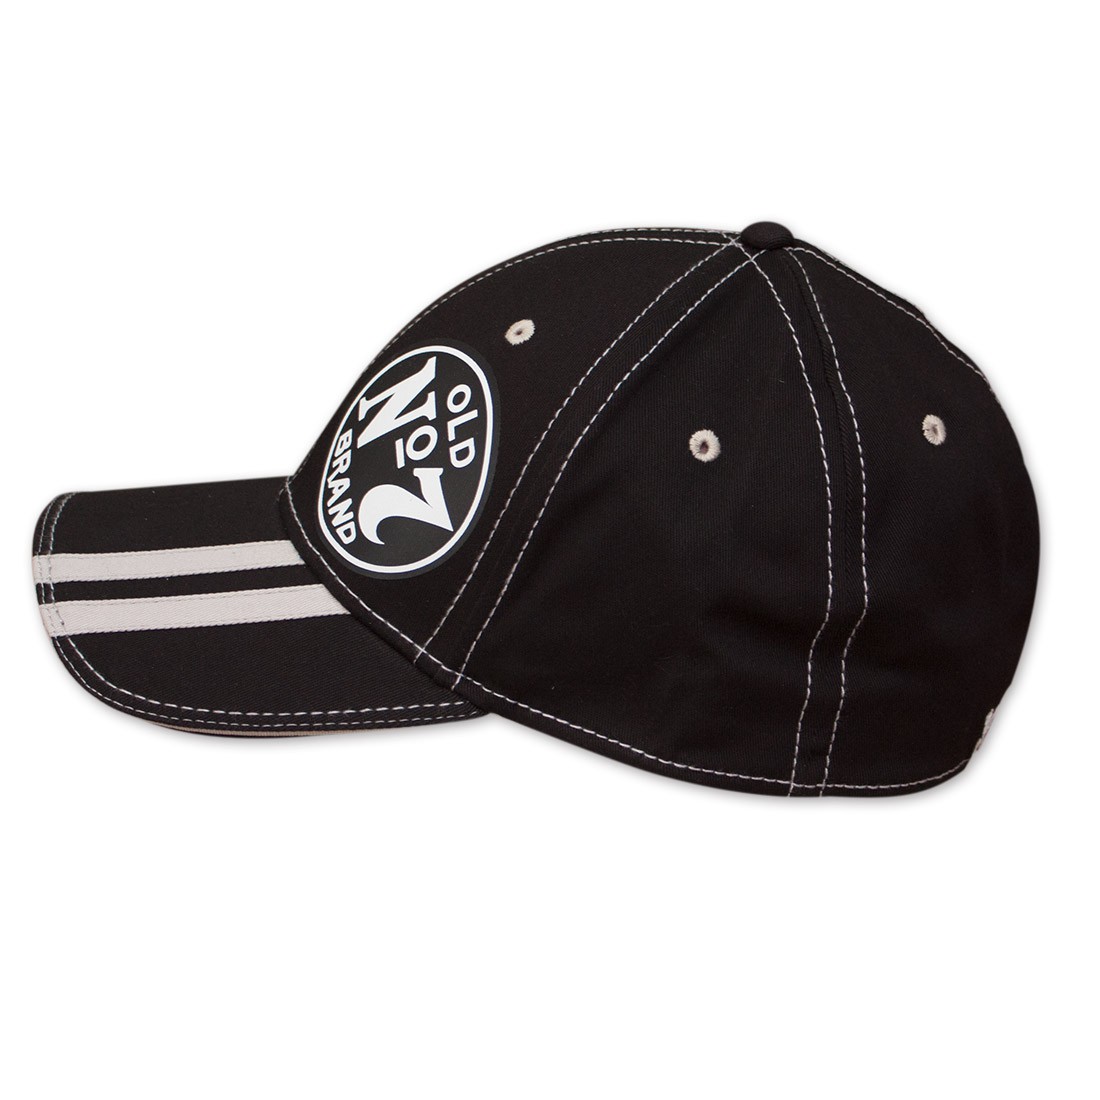 Jack Daniel's Old No. 7 Striped Brim Flex Fit Hat